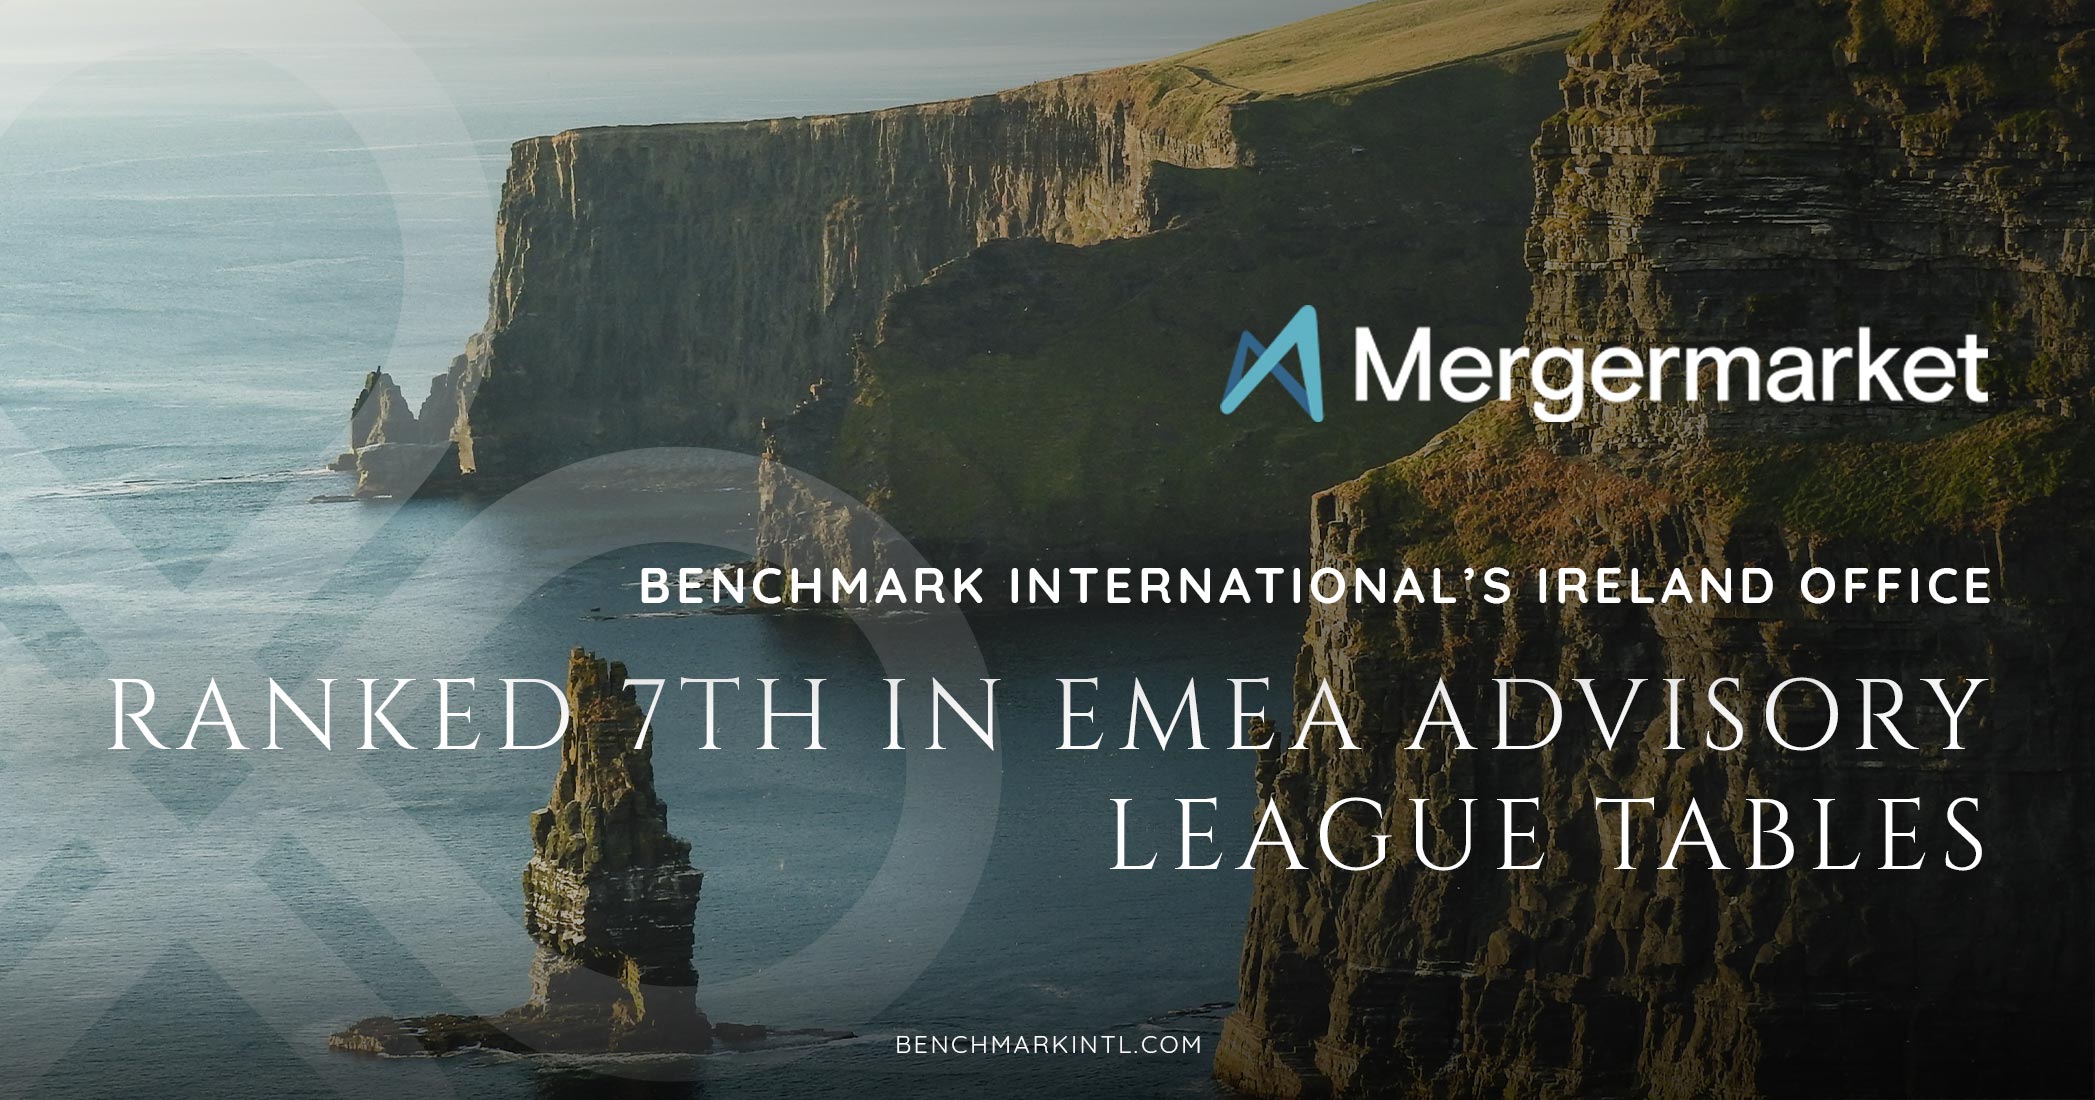 Benchmark International’s Ireland Office Ranked 7th In Emea Advisory League Tables